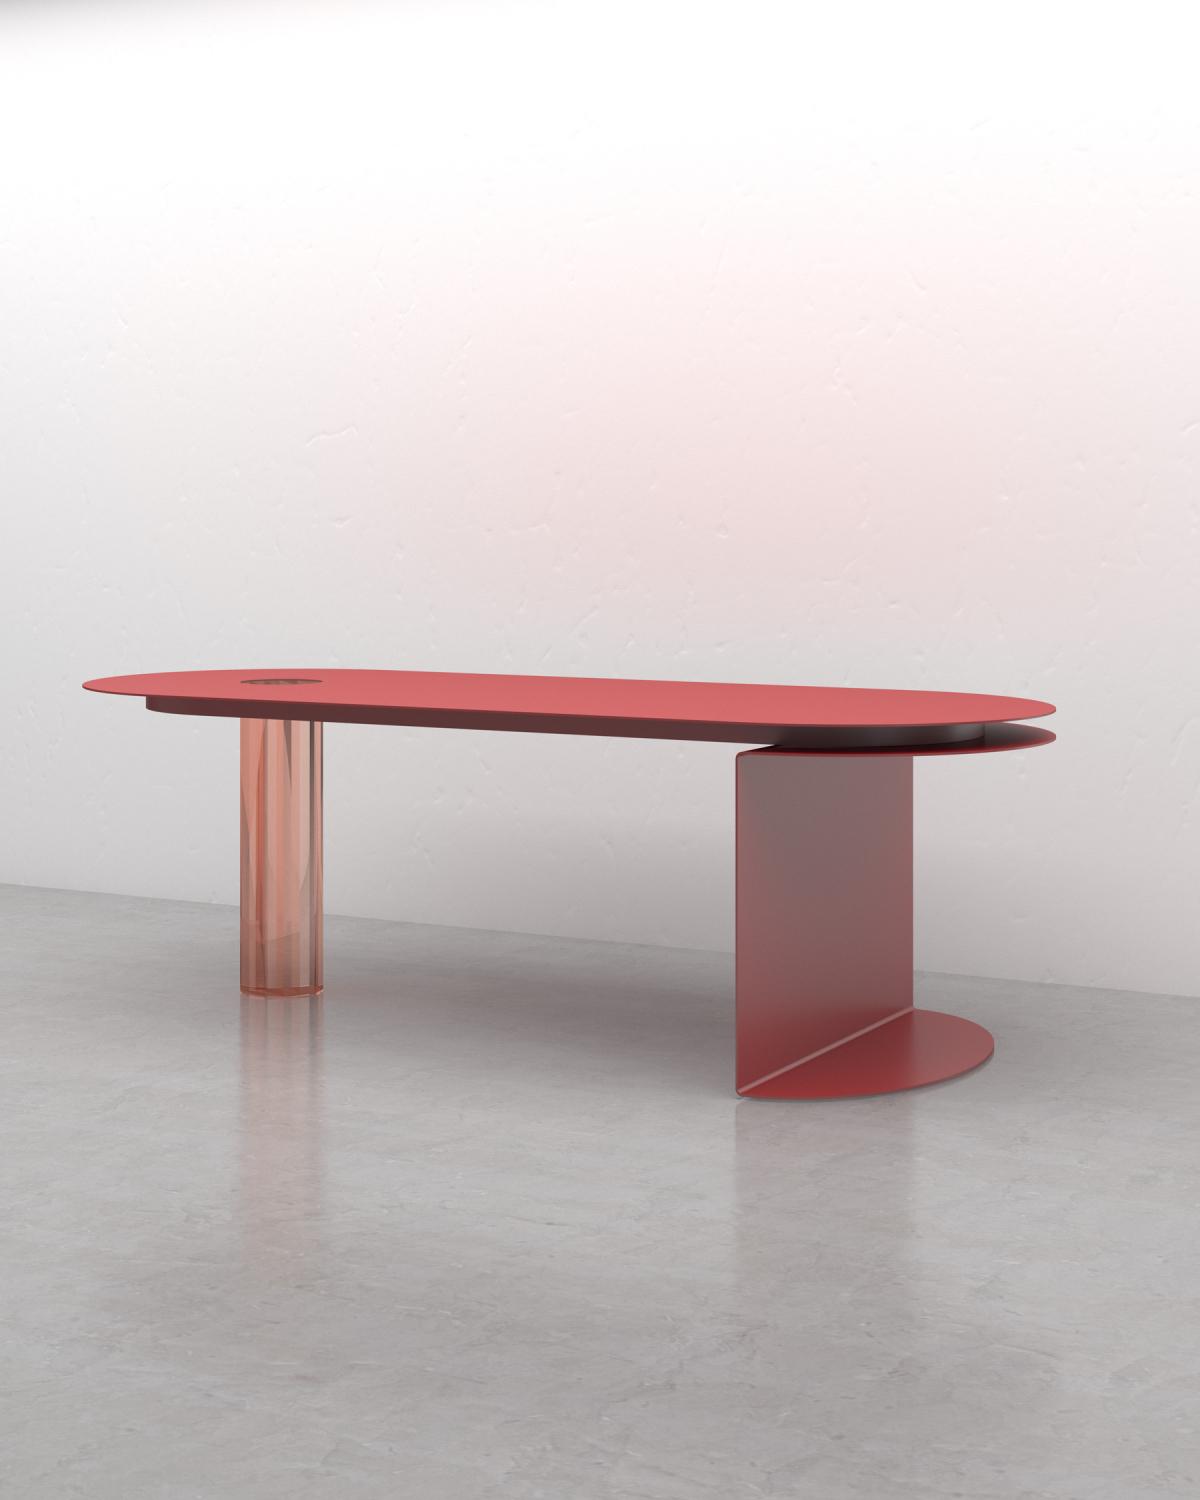 LANGERTISCH Rubrum - Product Design - Aluminium Table - Contemporary Object - Hamburg Design - detail